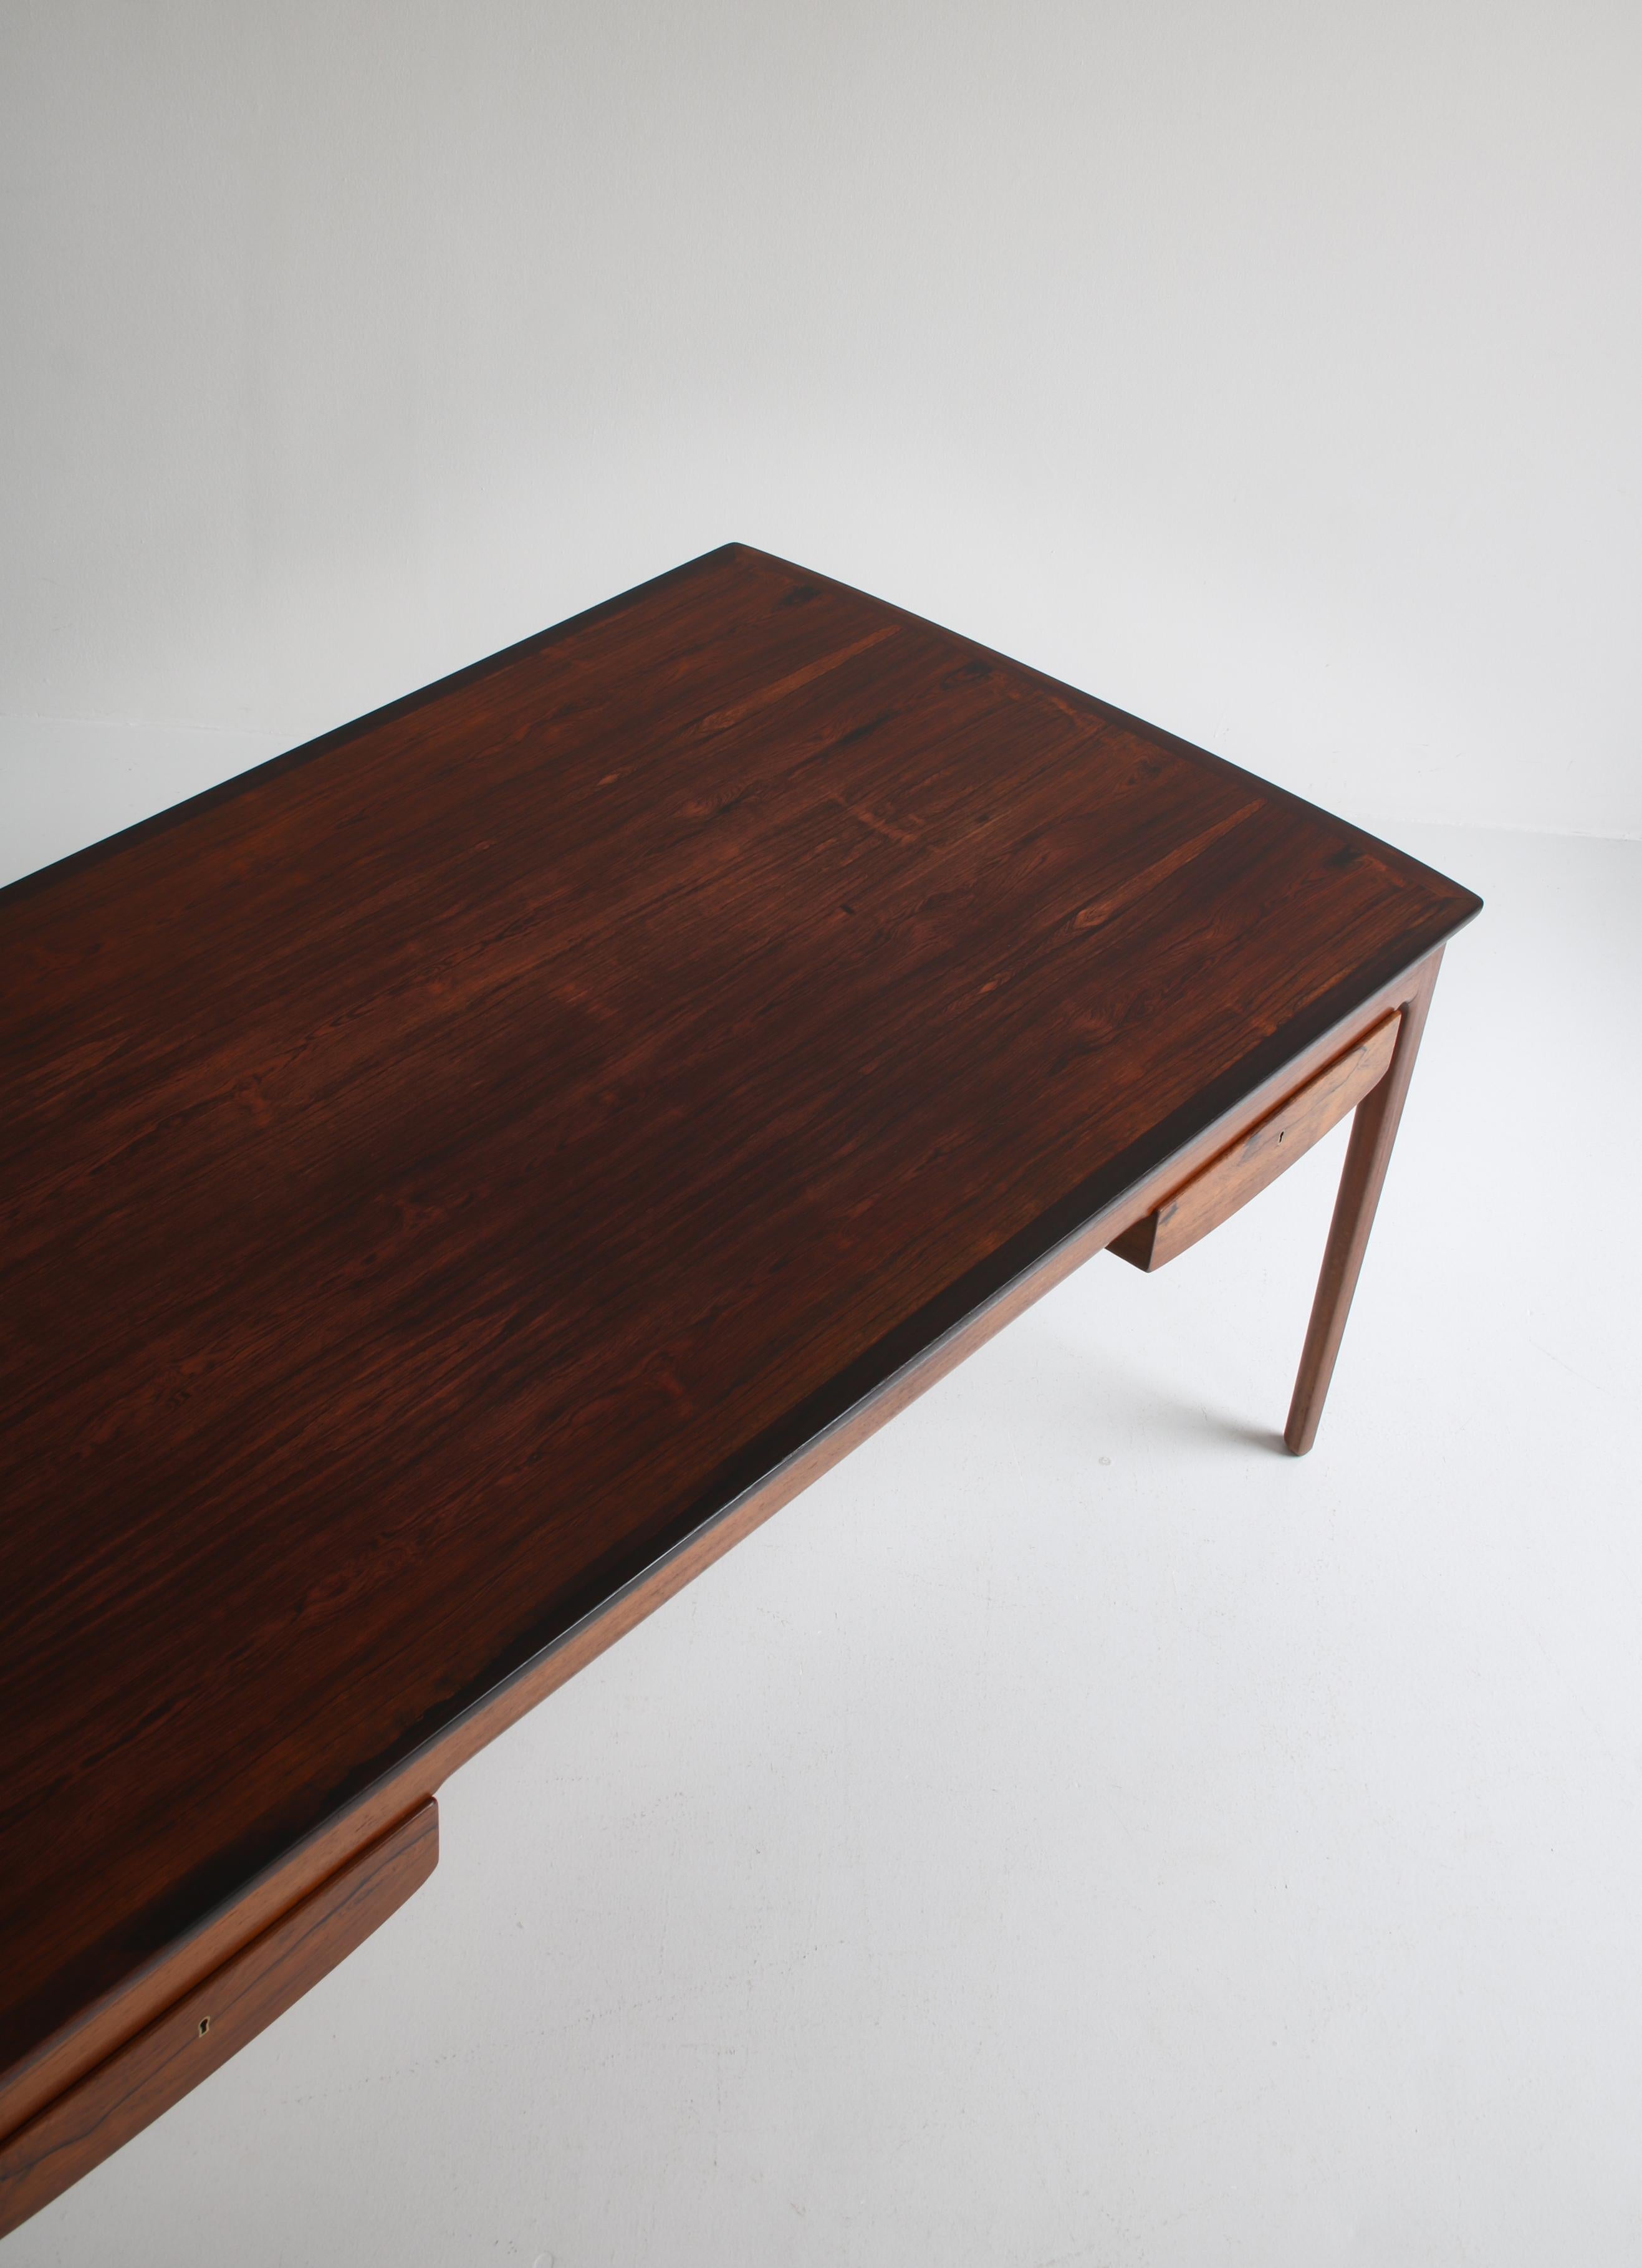 Ole Wanscher Freestanding Desk in Rosewood Made by A.J. Iversen, Copenhagen 1959 For Sale 5